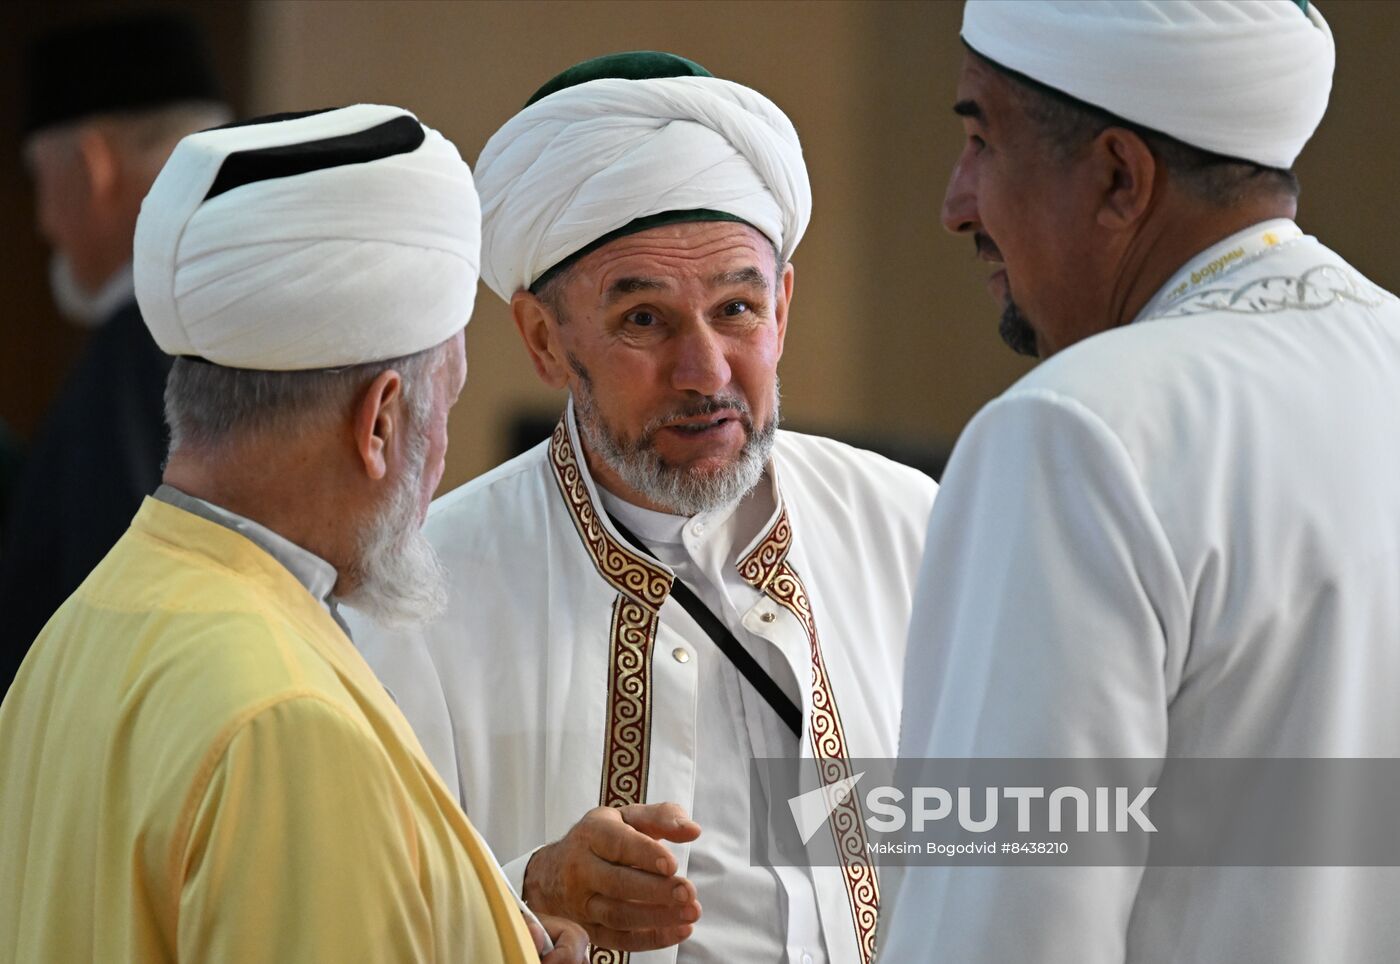 KAZANFORUM 2023. Russian Forum of Tatar Religious Figures